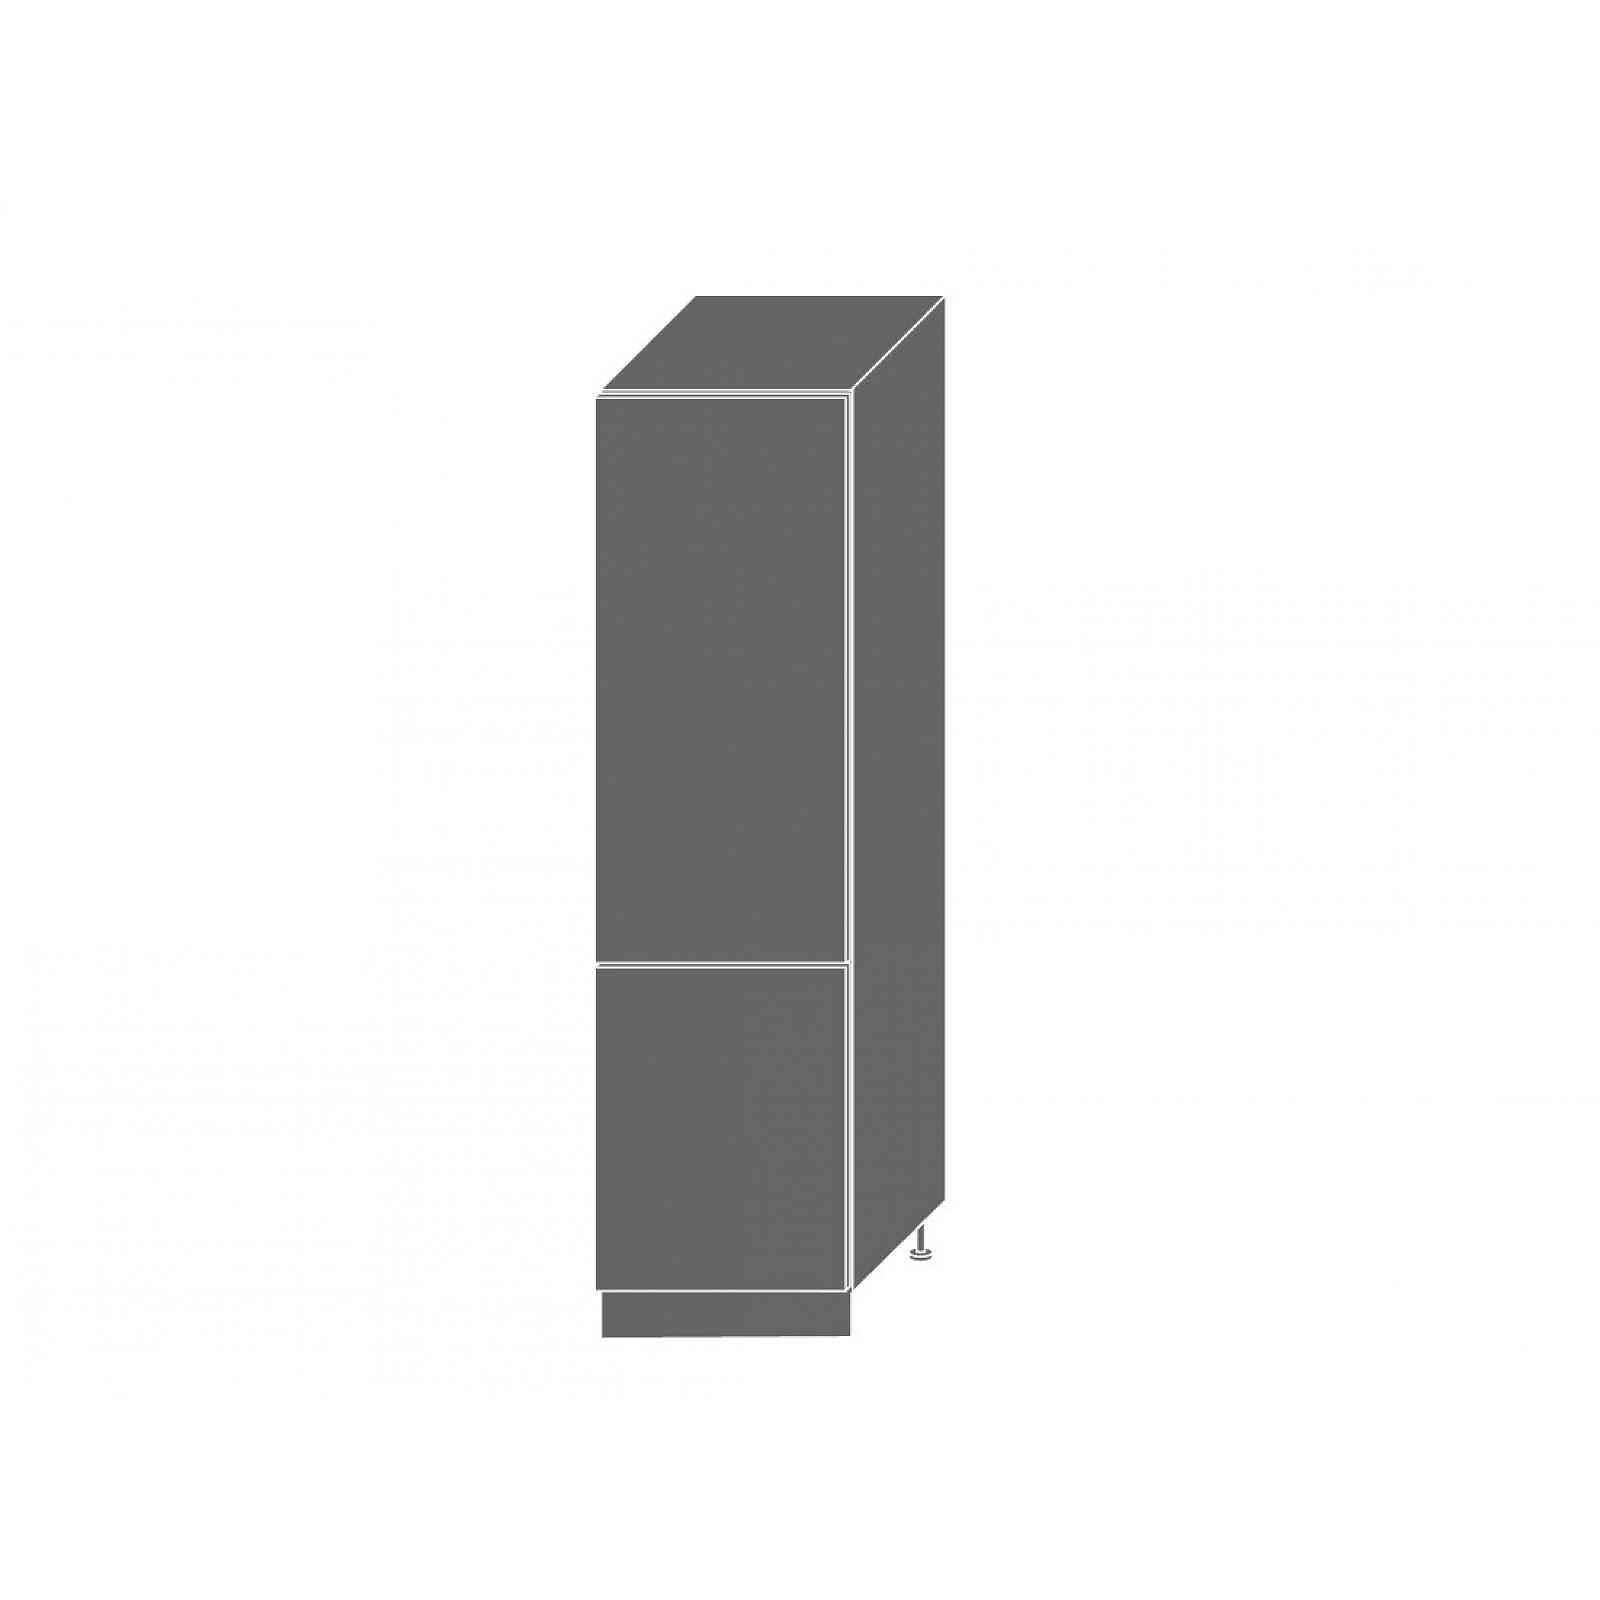 QUANTUM, skříňka pro vestavnou lednici D14DL, beige mat/bílá